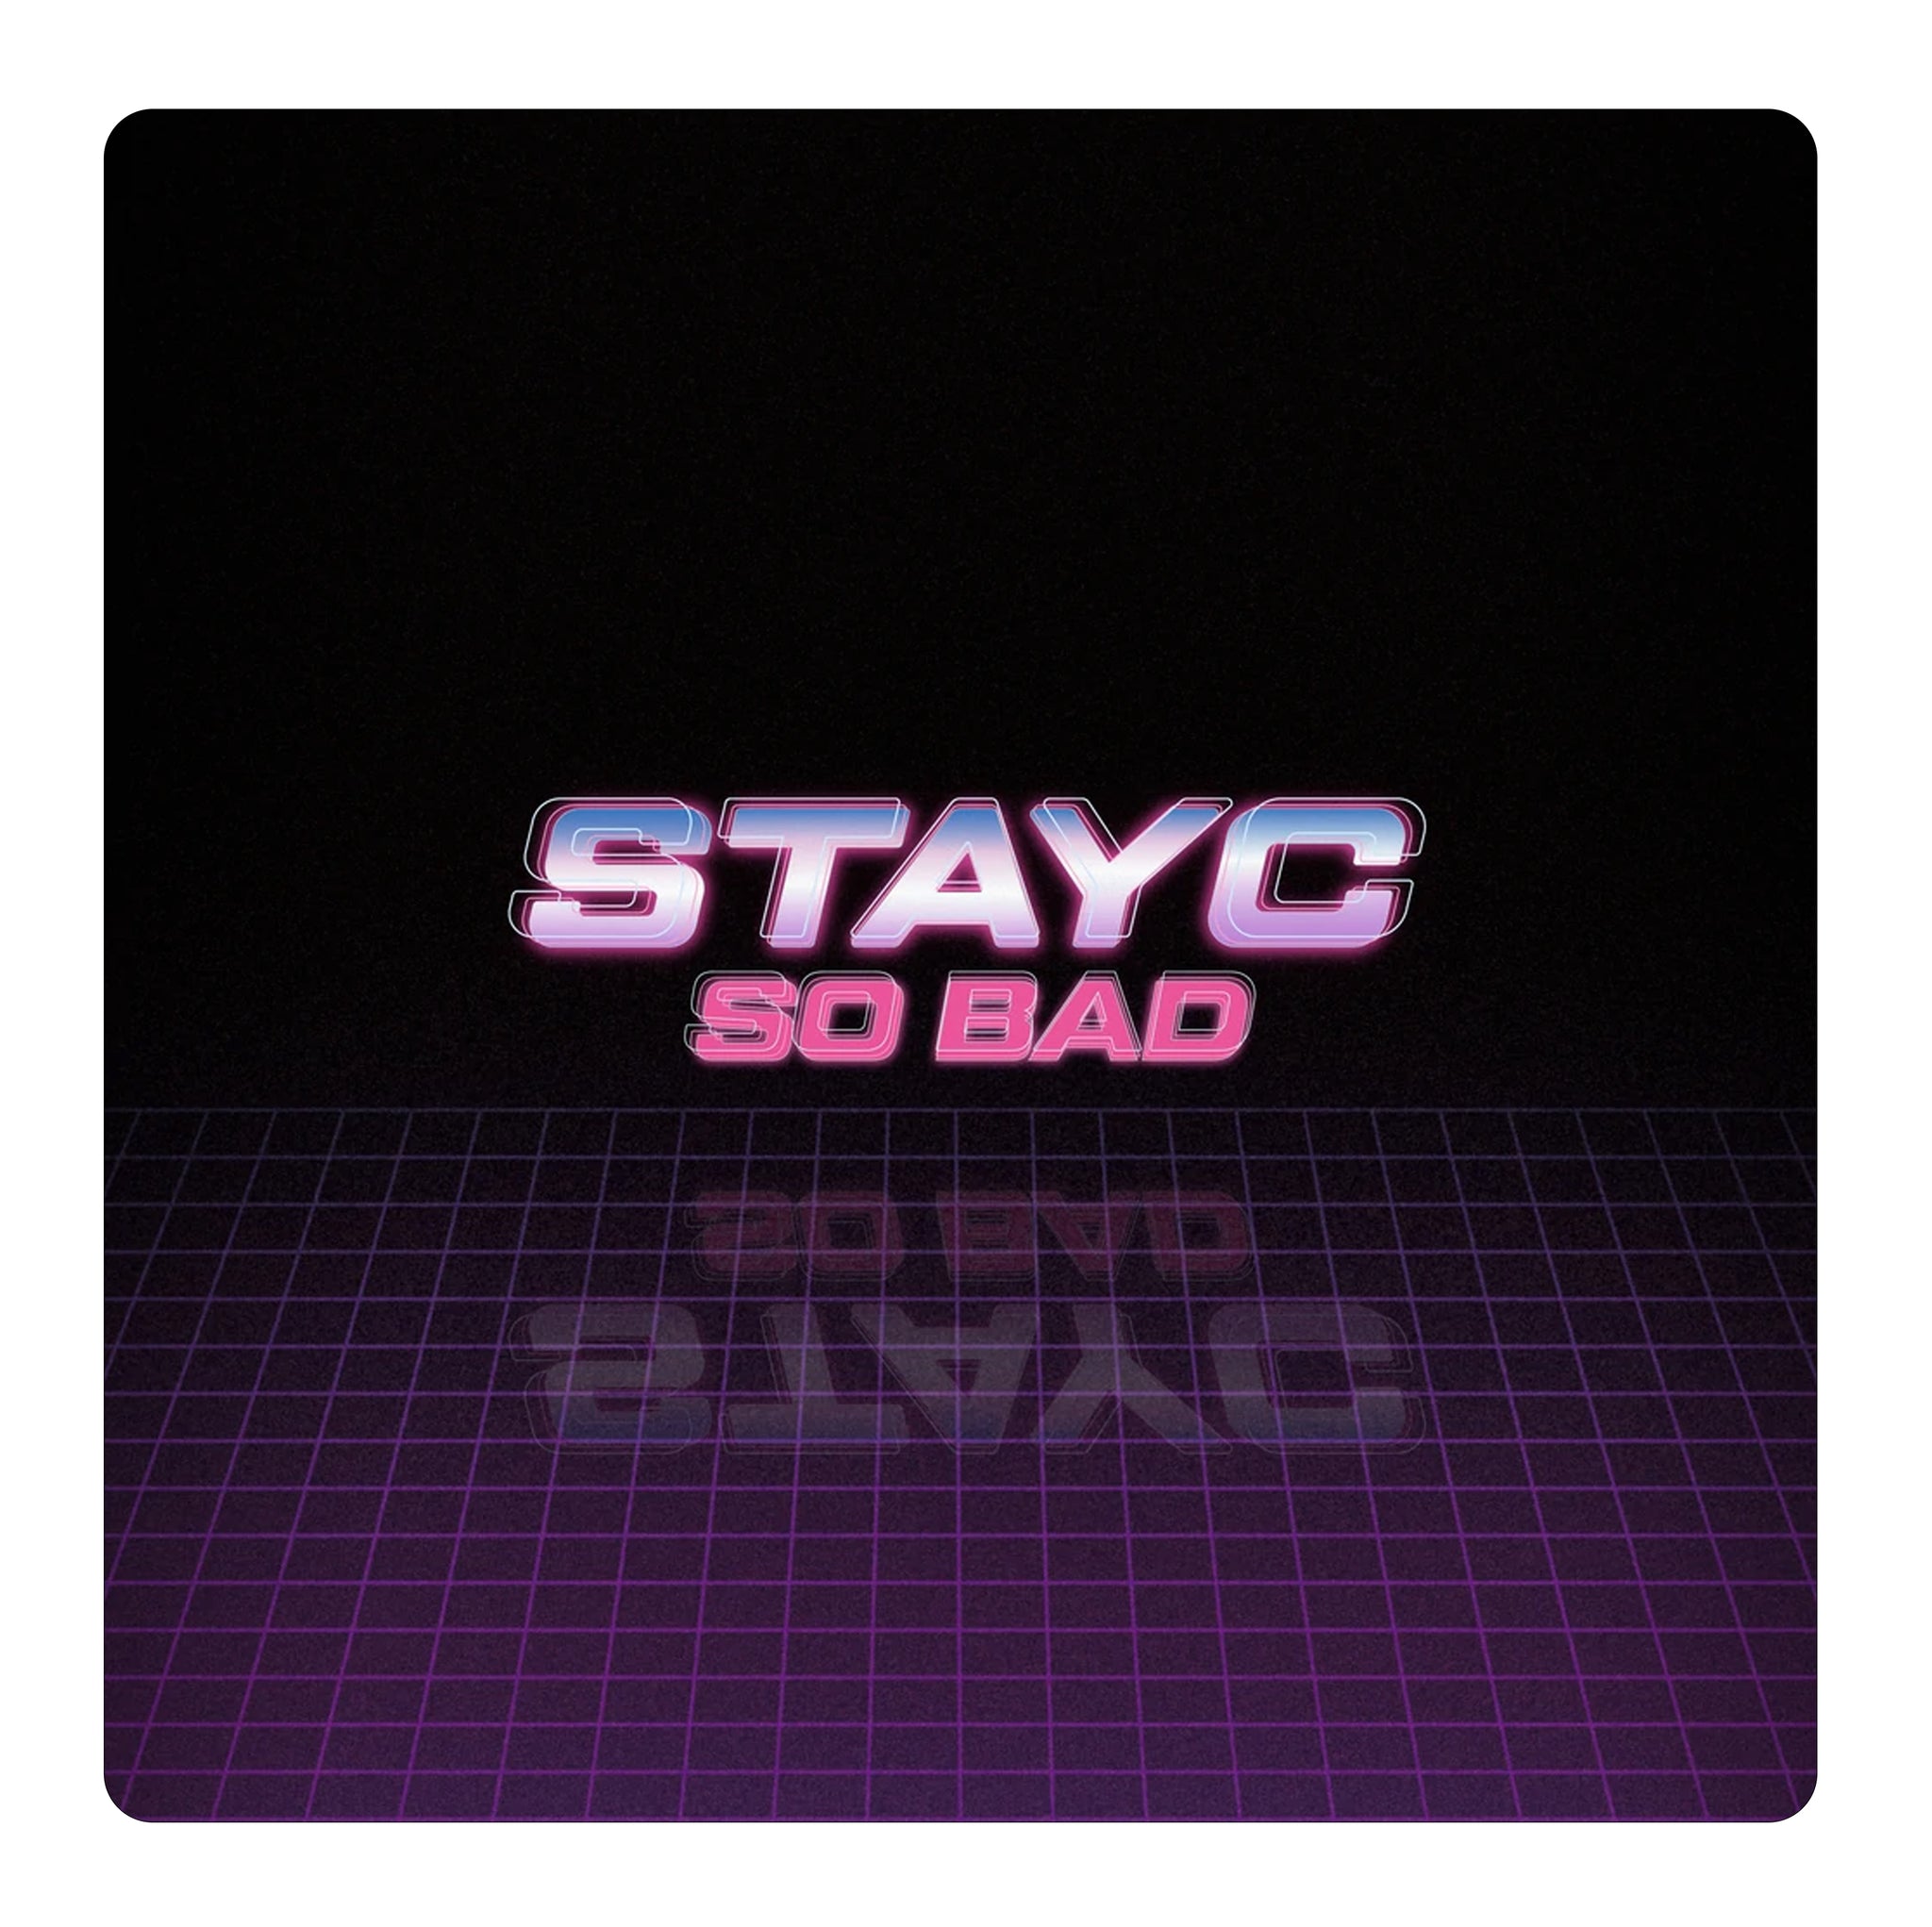 STAYC - So bad